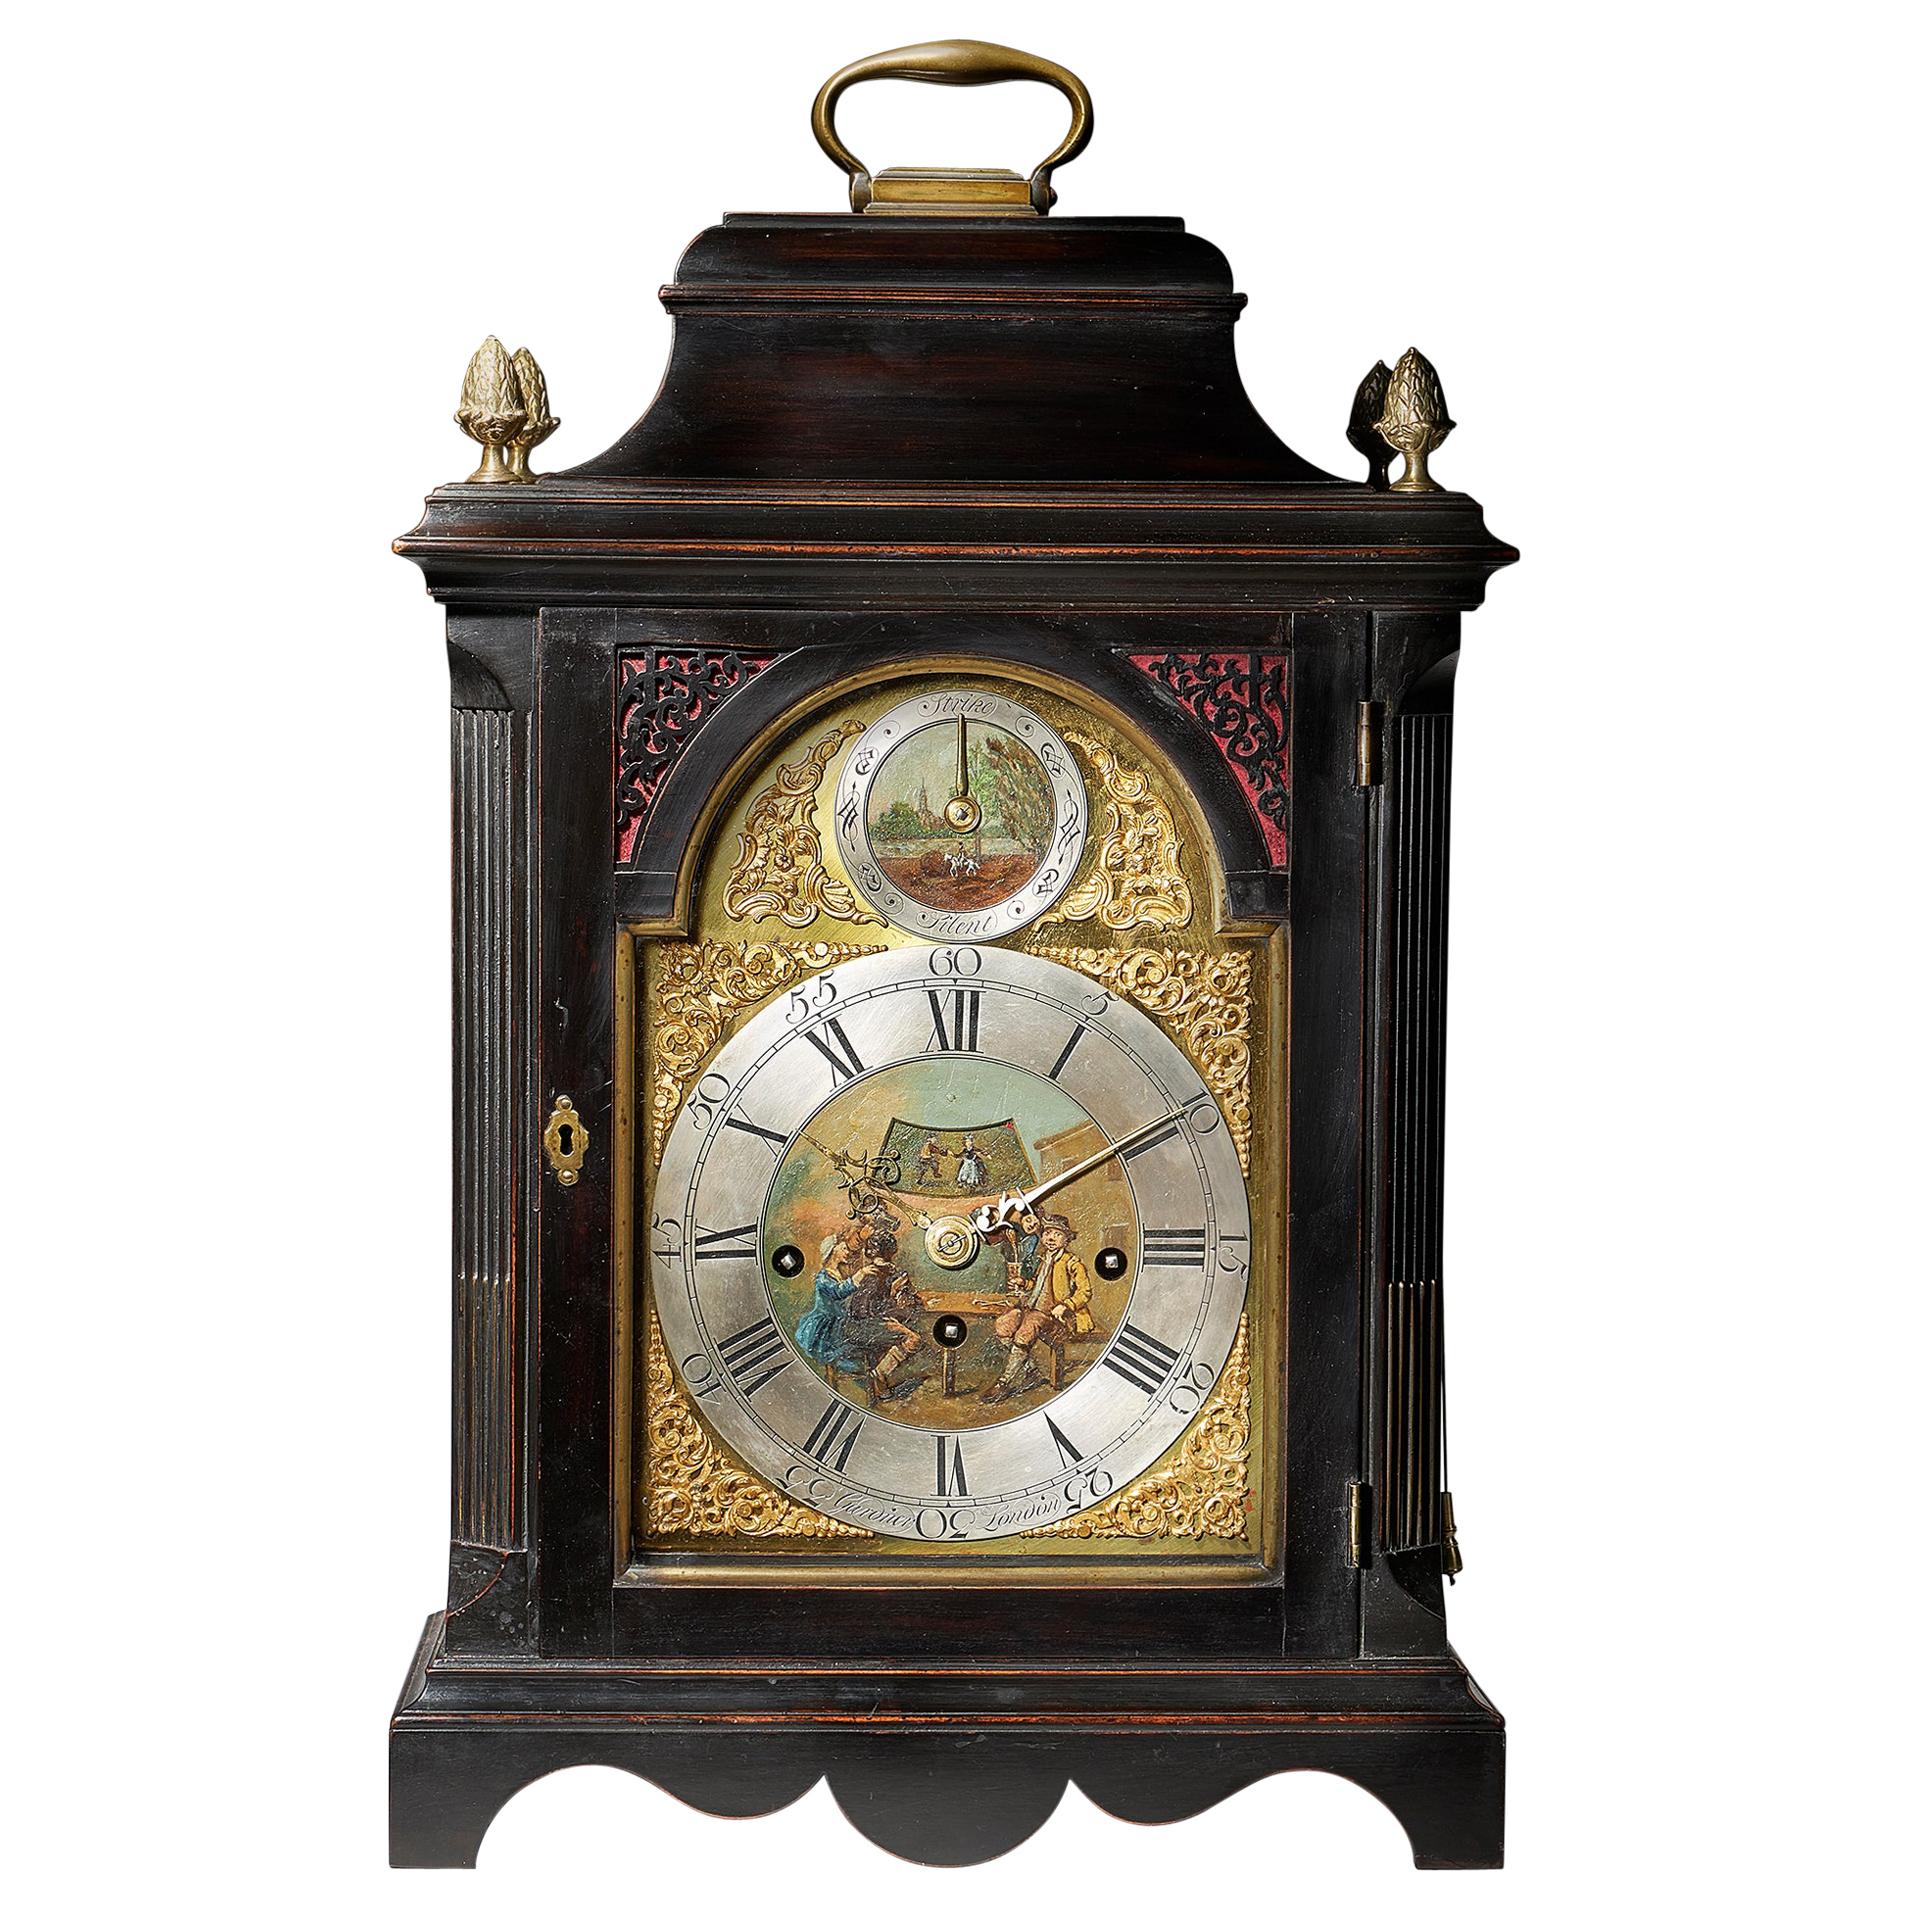 Extremely Rare George III 18th Century Quarter-Striking Bracket Clock, Signed